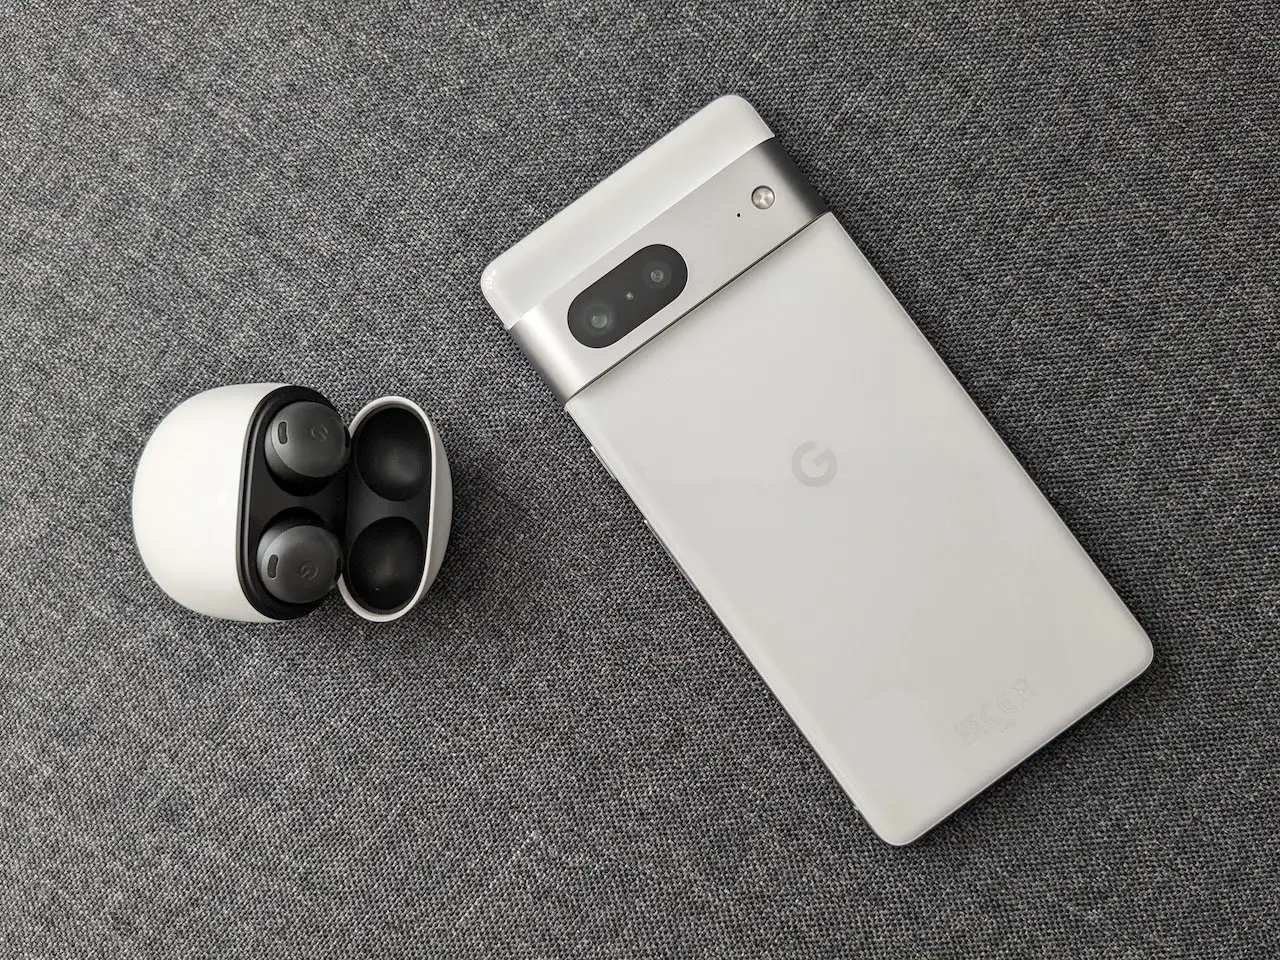 Google Pixel phones run into battery issues following June update